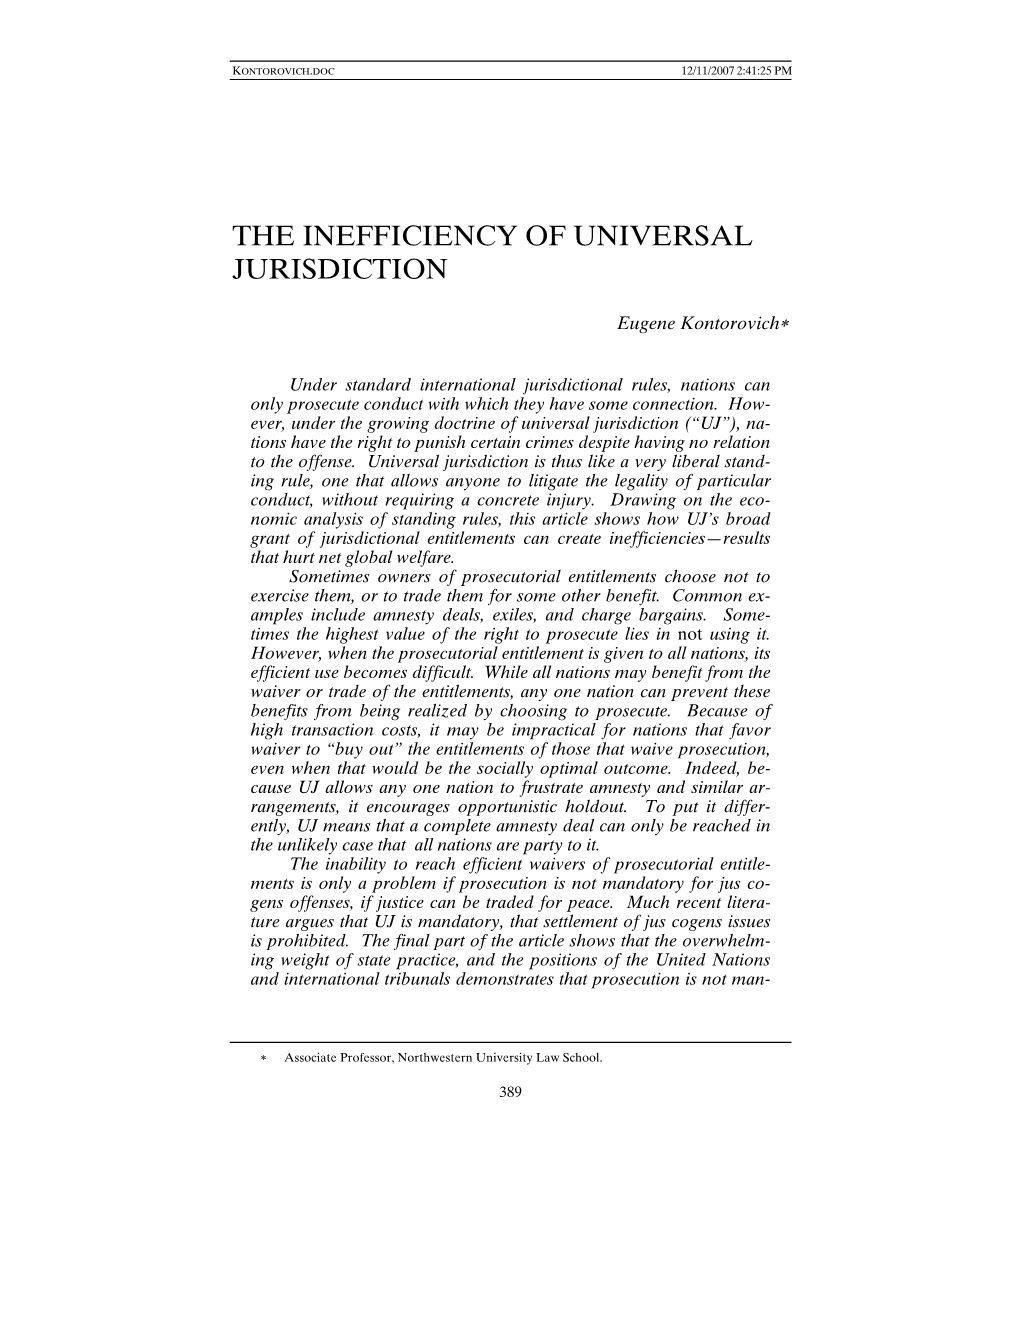 The Inefficiency of Universal Jurisdiction